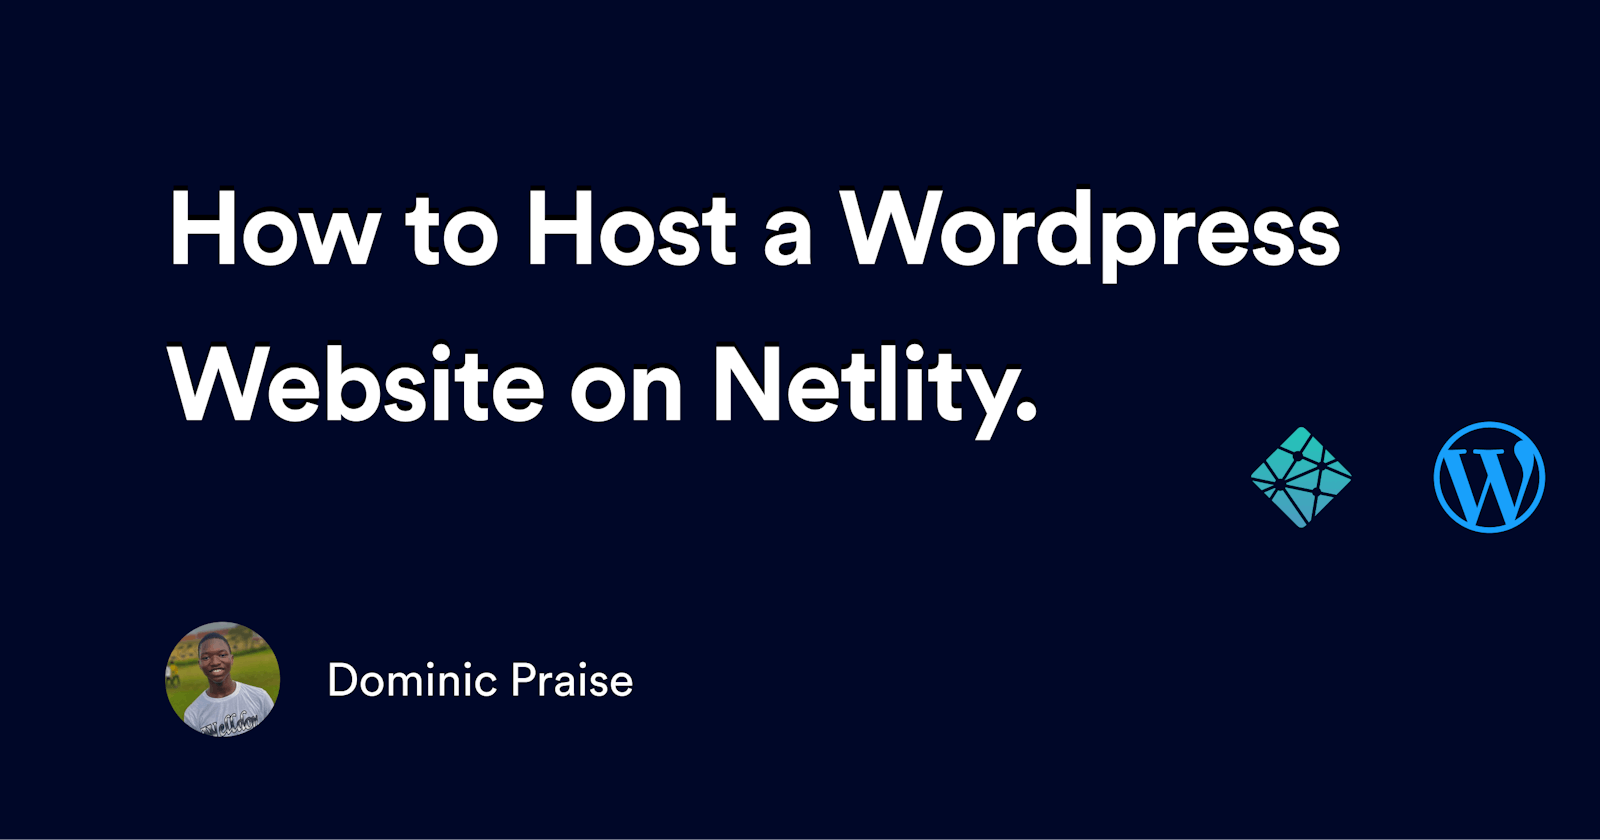 Hosting a WordPress Website on Netlify.